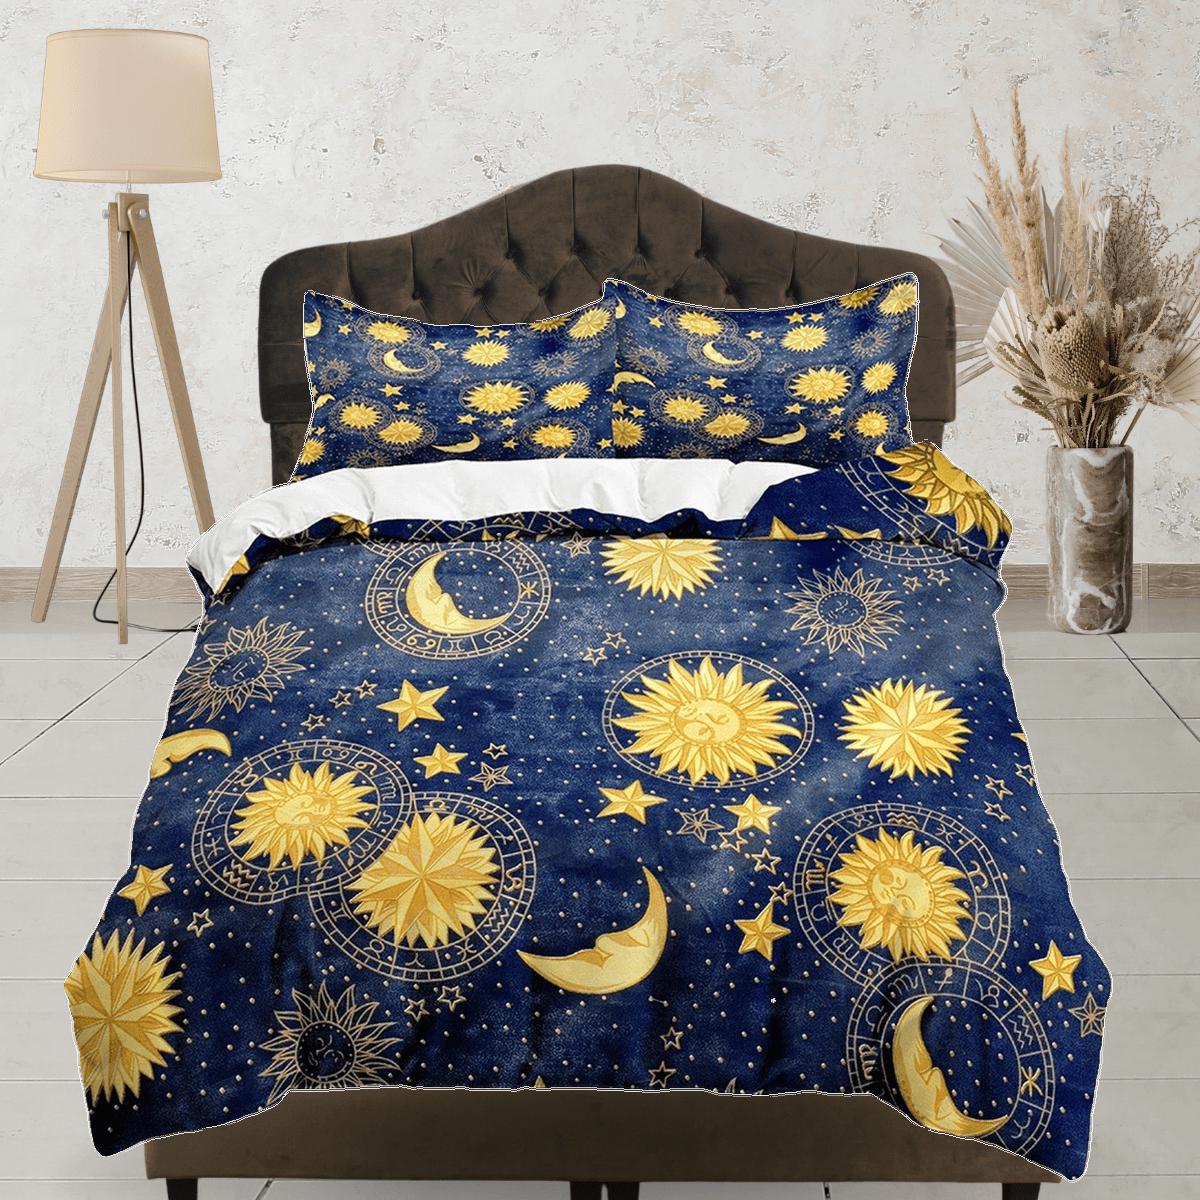 daintyduvet Celestial bedding blue sky sun and moon, witchy decor dorm bedding, aesthetic duvet cover, boho bedding set full king queen, astrology gifts